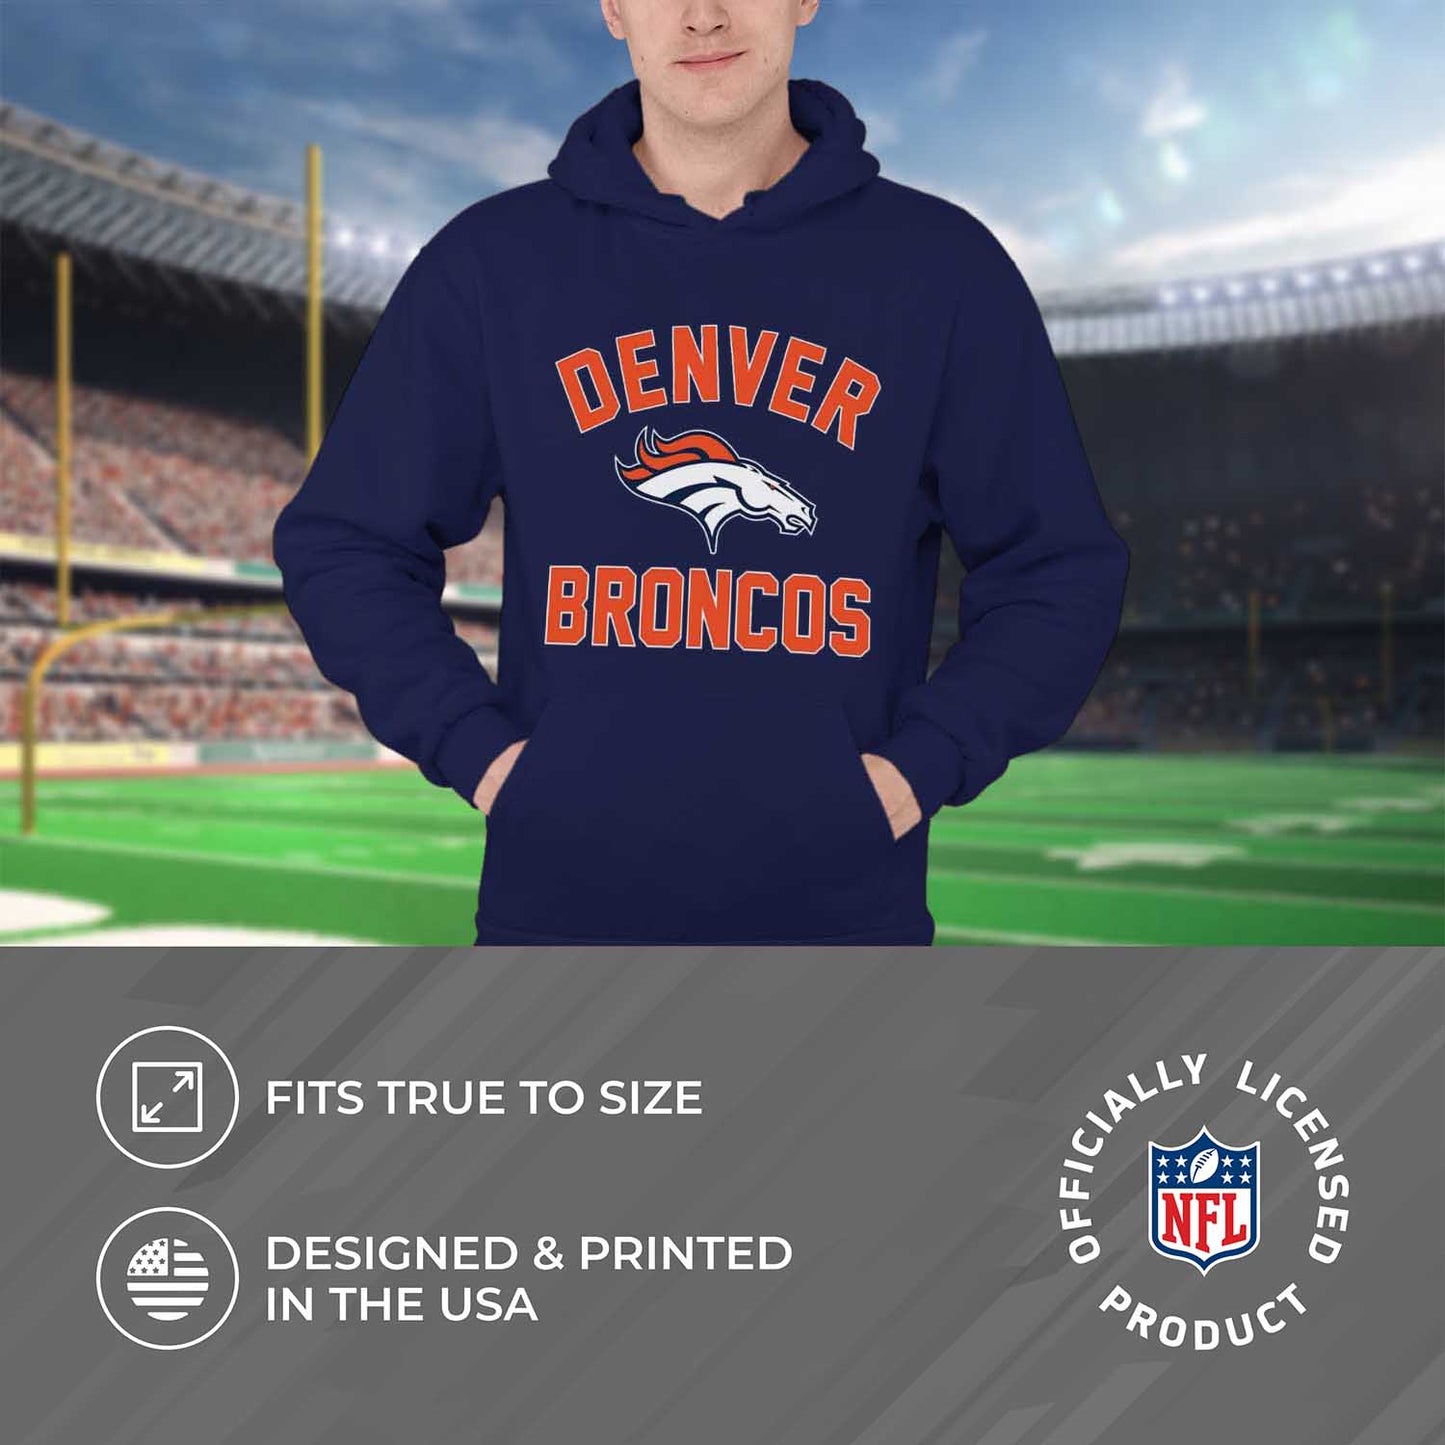 Denver Broncos NFL Adult Gameday Hooded Sweatshirt - Navy